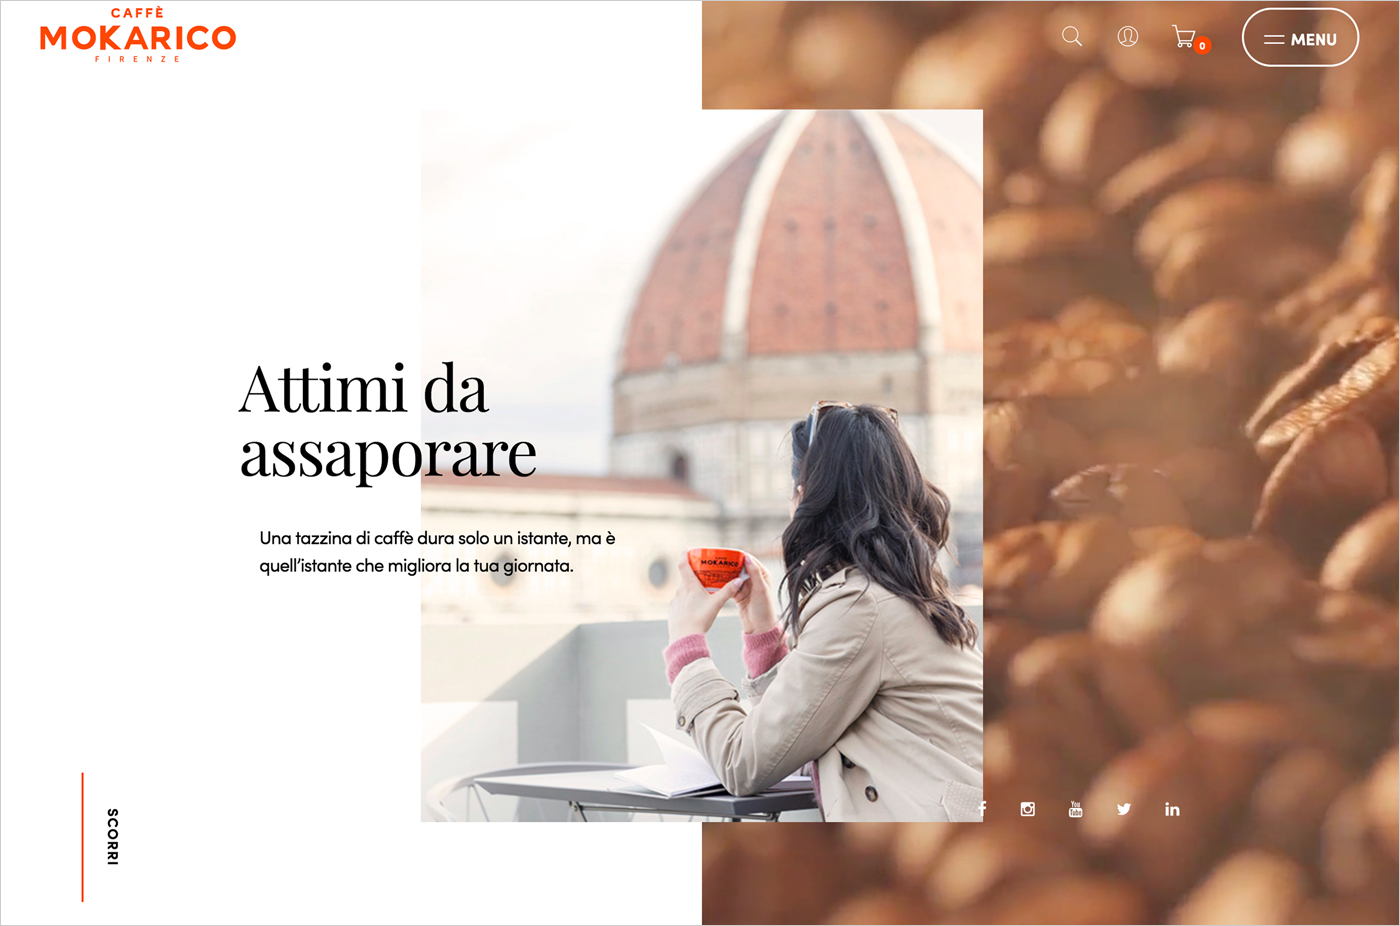 Caffè Espresso Italiano, Attimi da assaporare | Caffè Mokarico Firenzeウェブサイトの画面キャプチャ画像